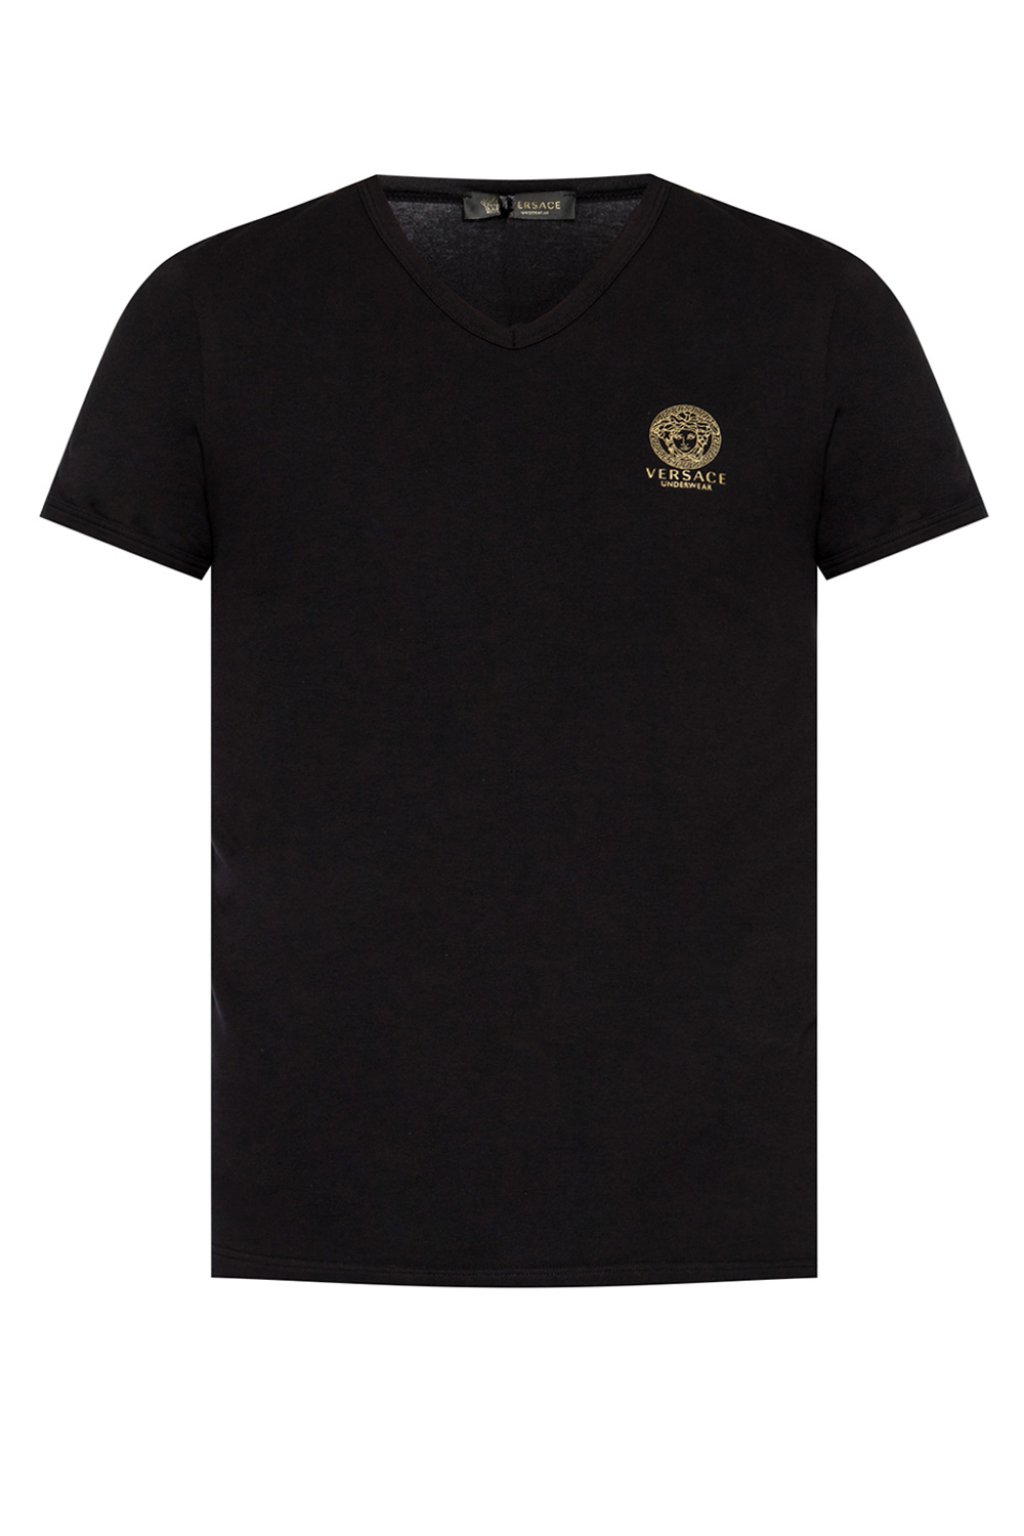 Versace T-shirt with logo | Men's Clothing | Vitkac